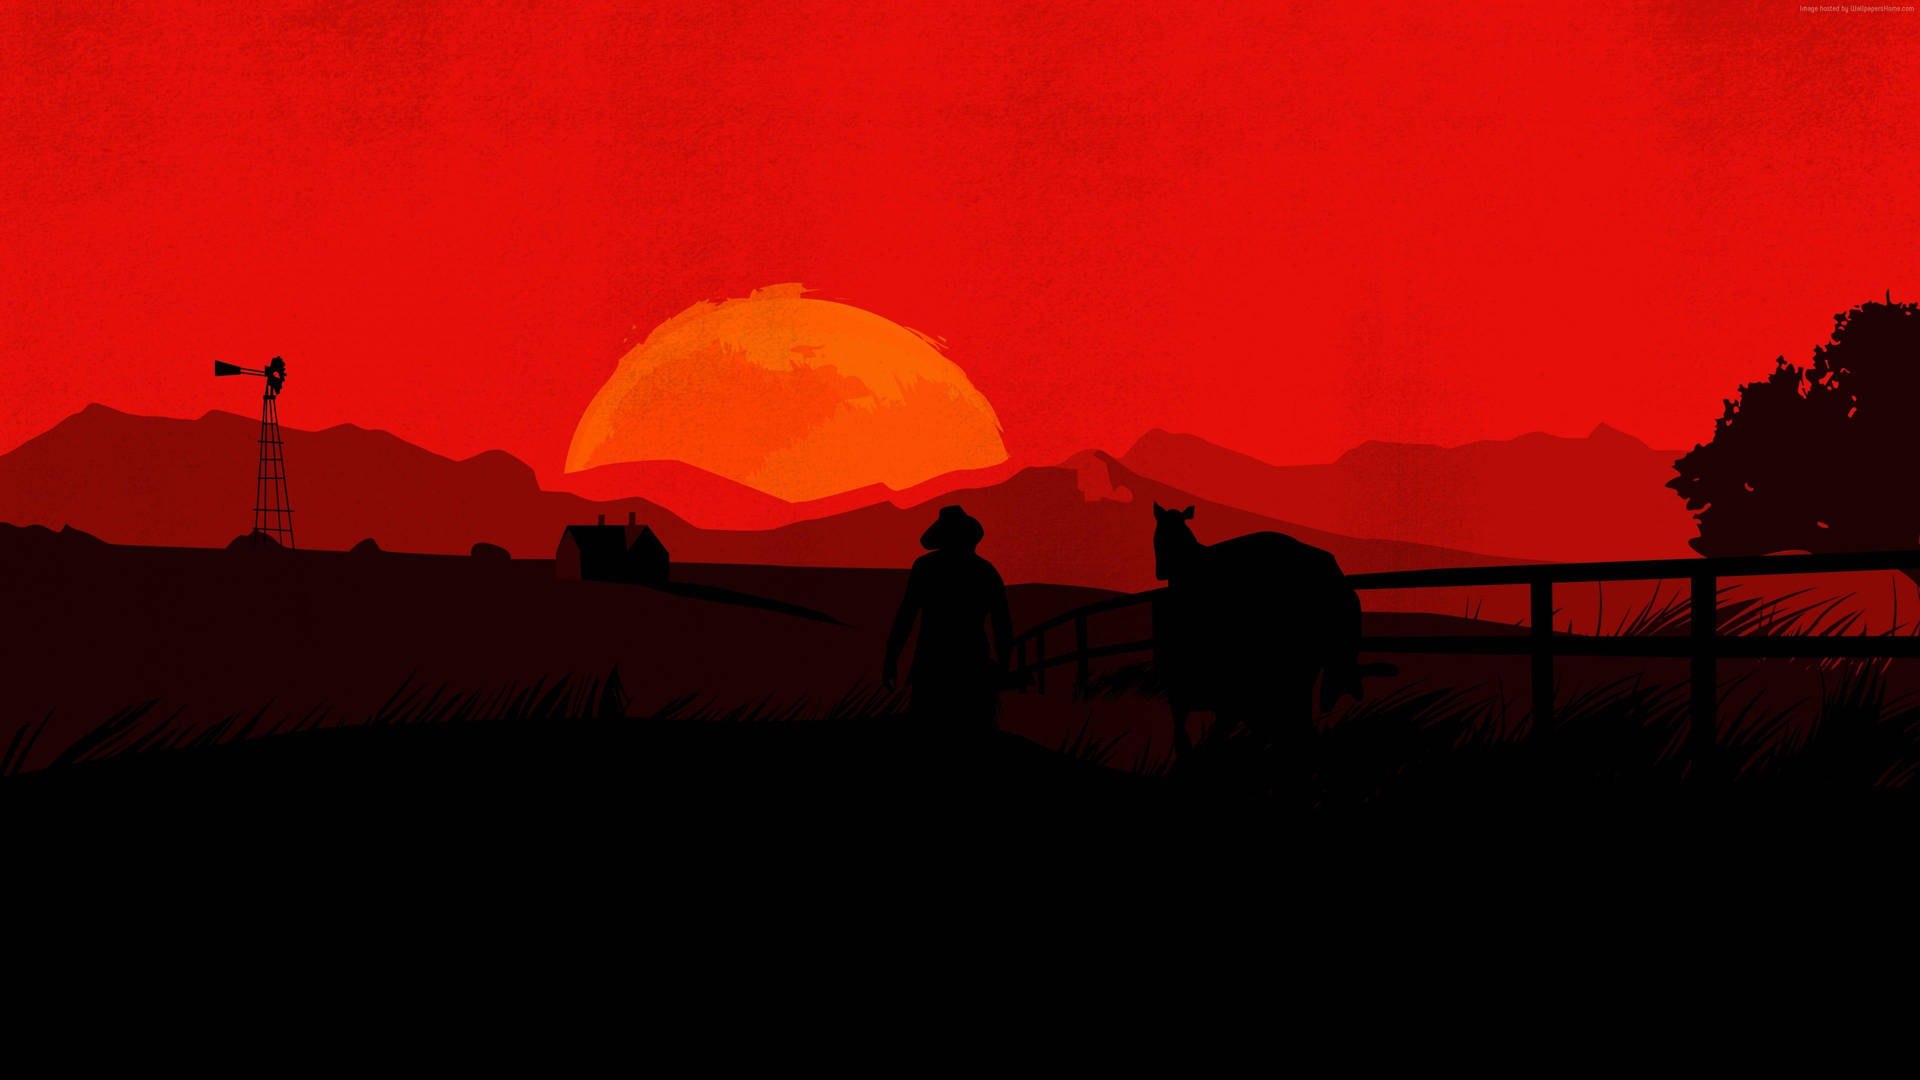 1920x1080] Red Dead Redemption 2 Wallpaper : r/PSW